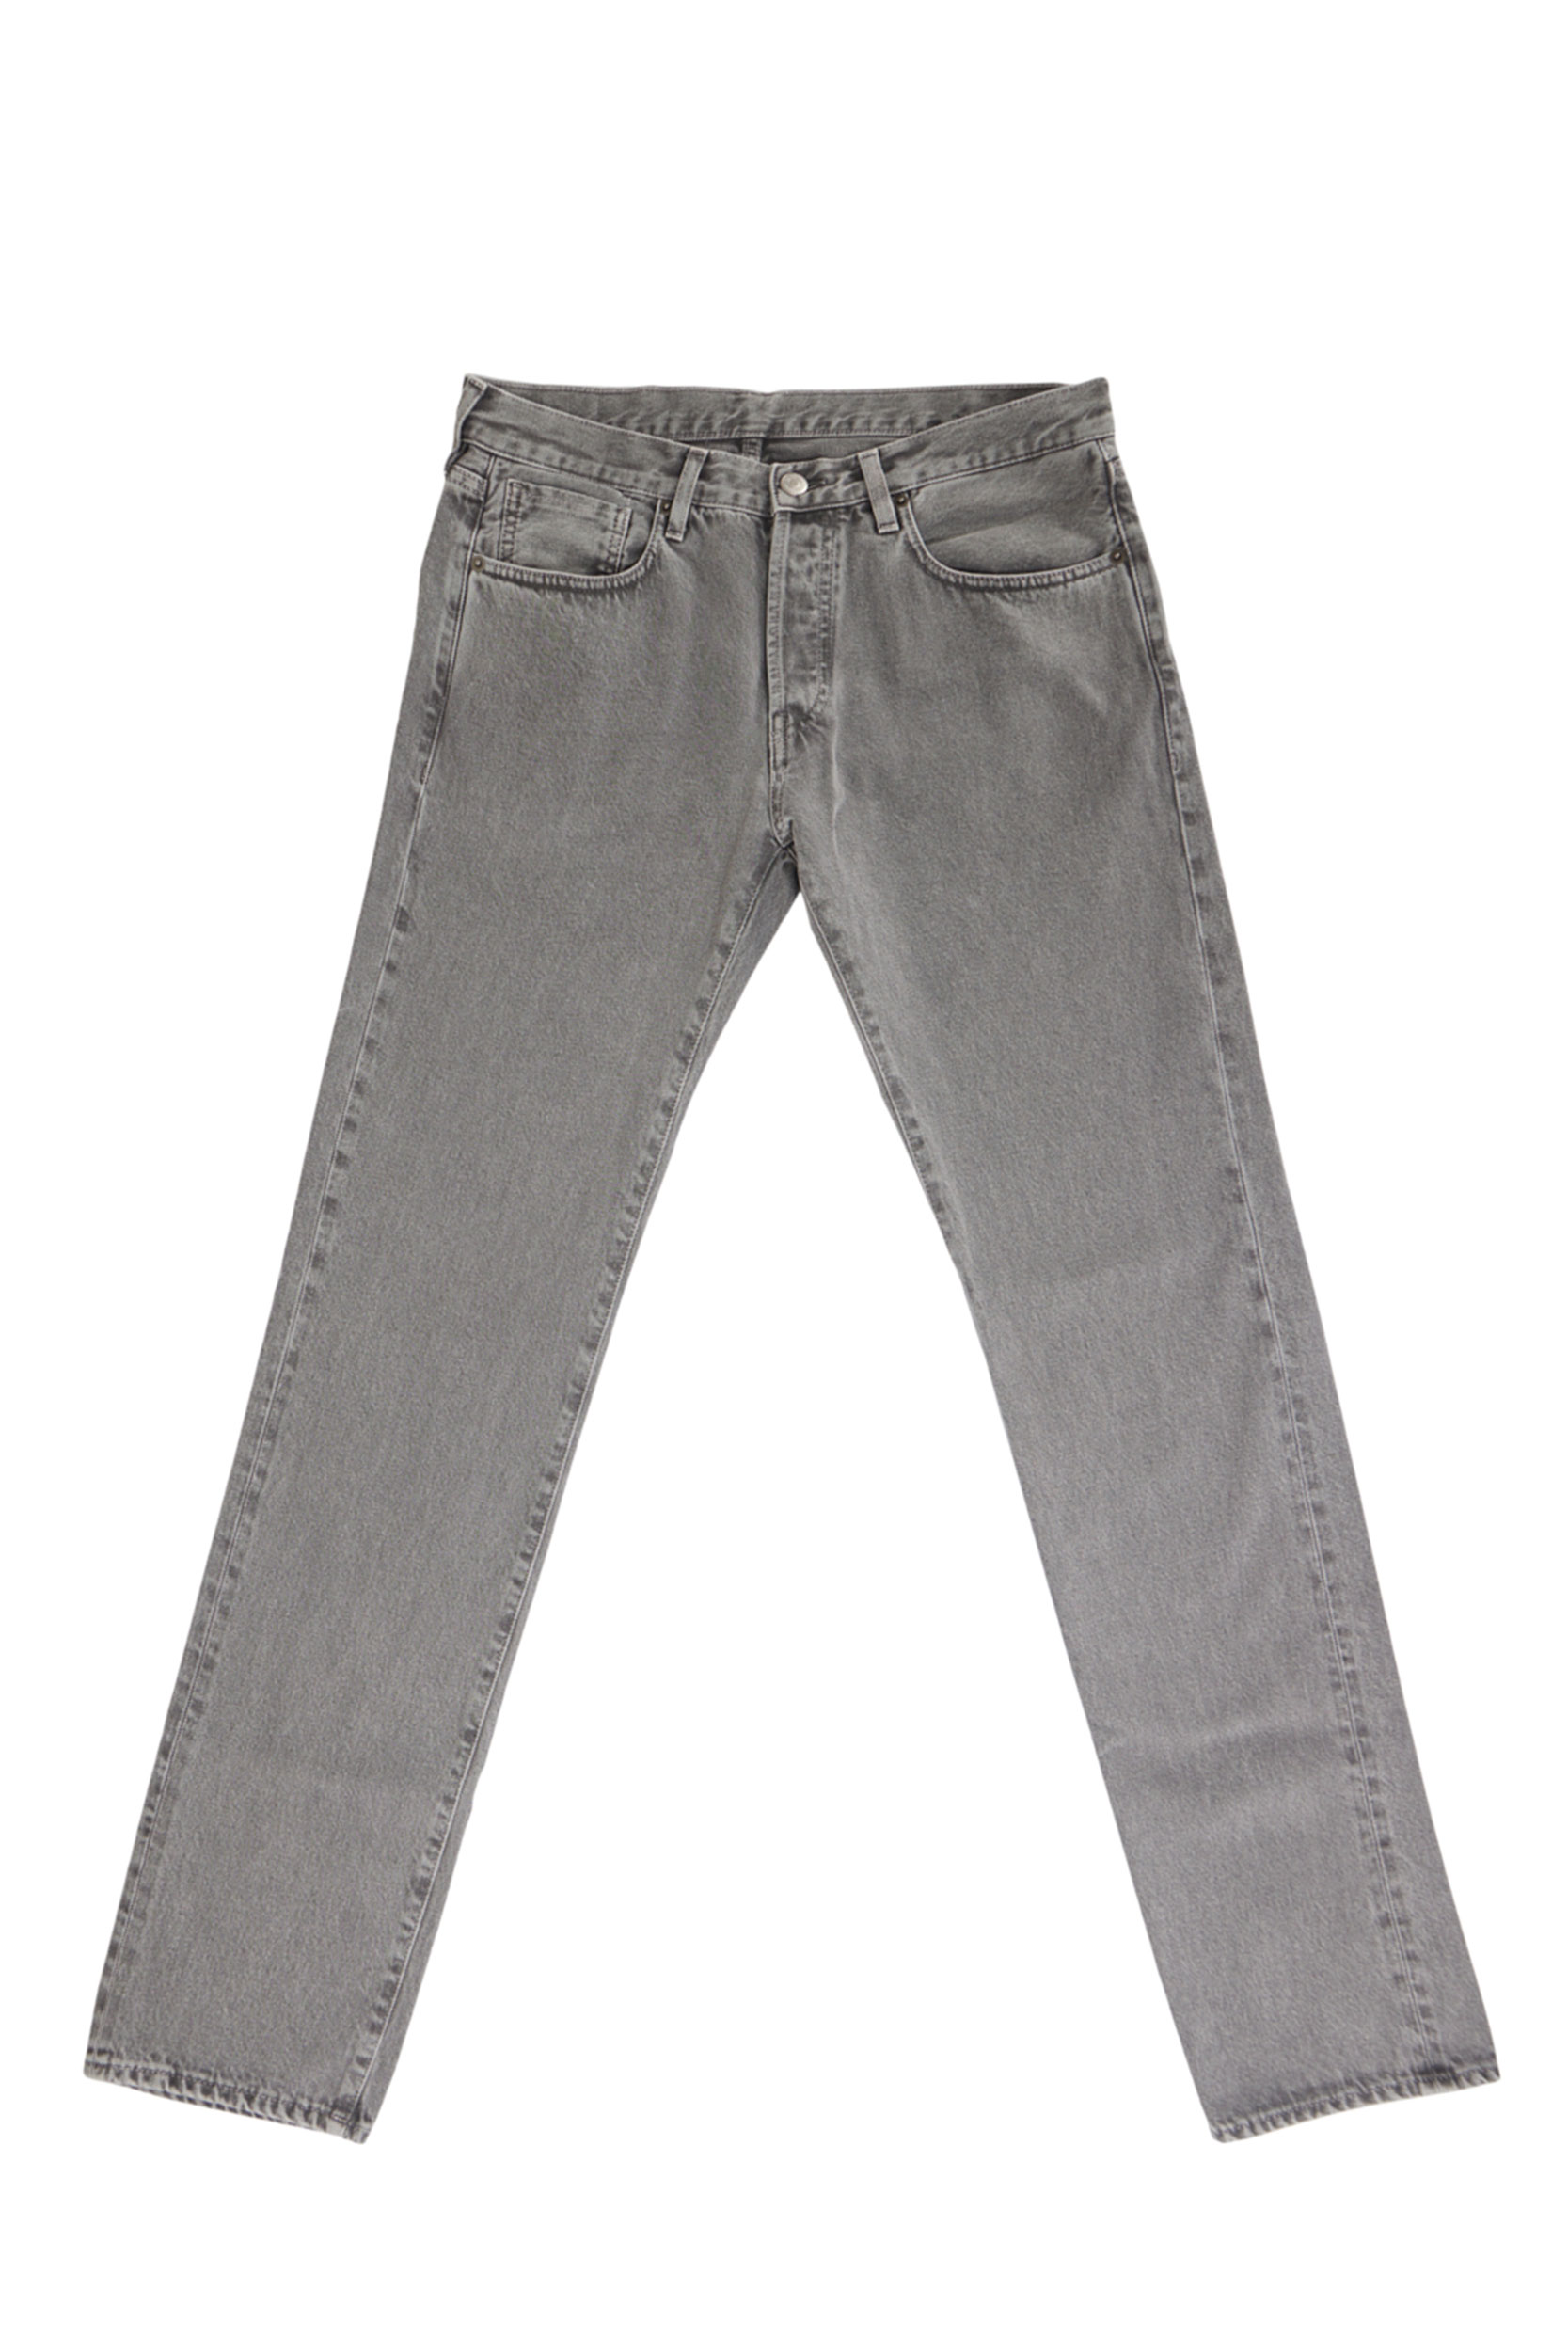 Buy Cantabil Light Grey Cotton Regular Fit Jeans for Mens Online @ Tata CLiQ